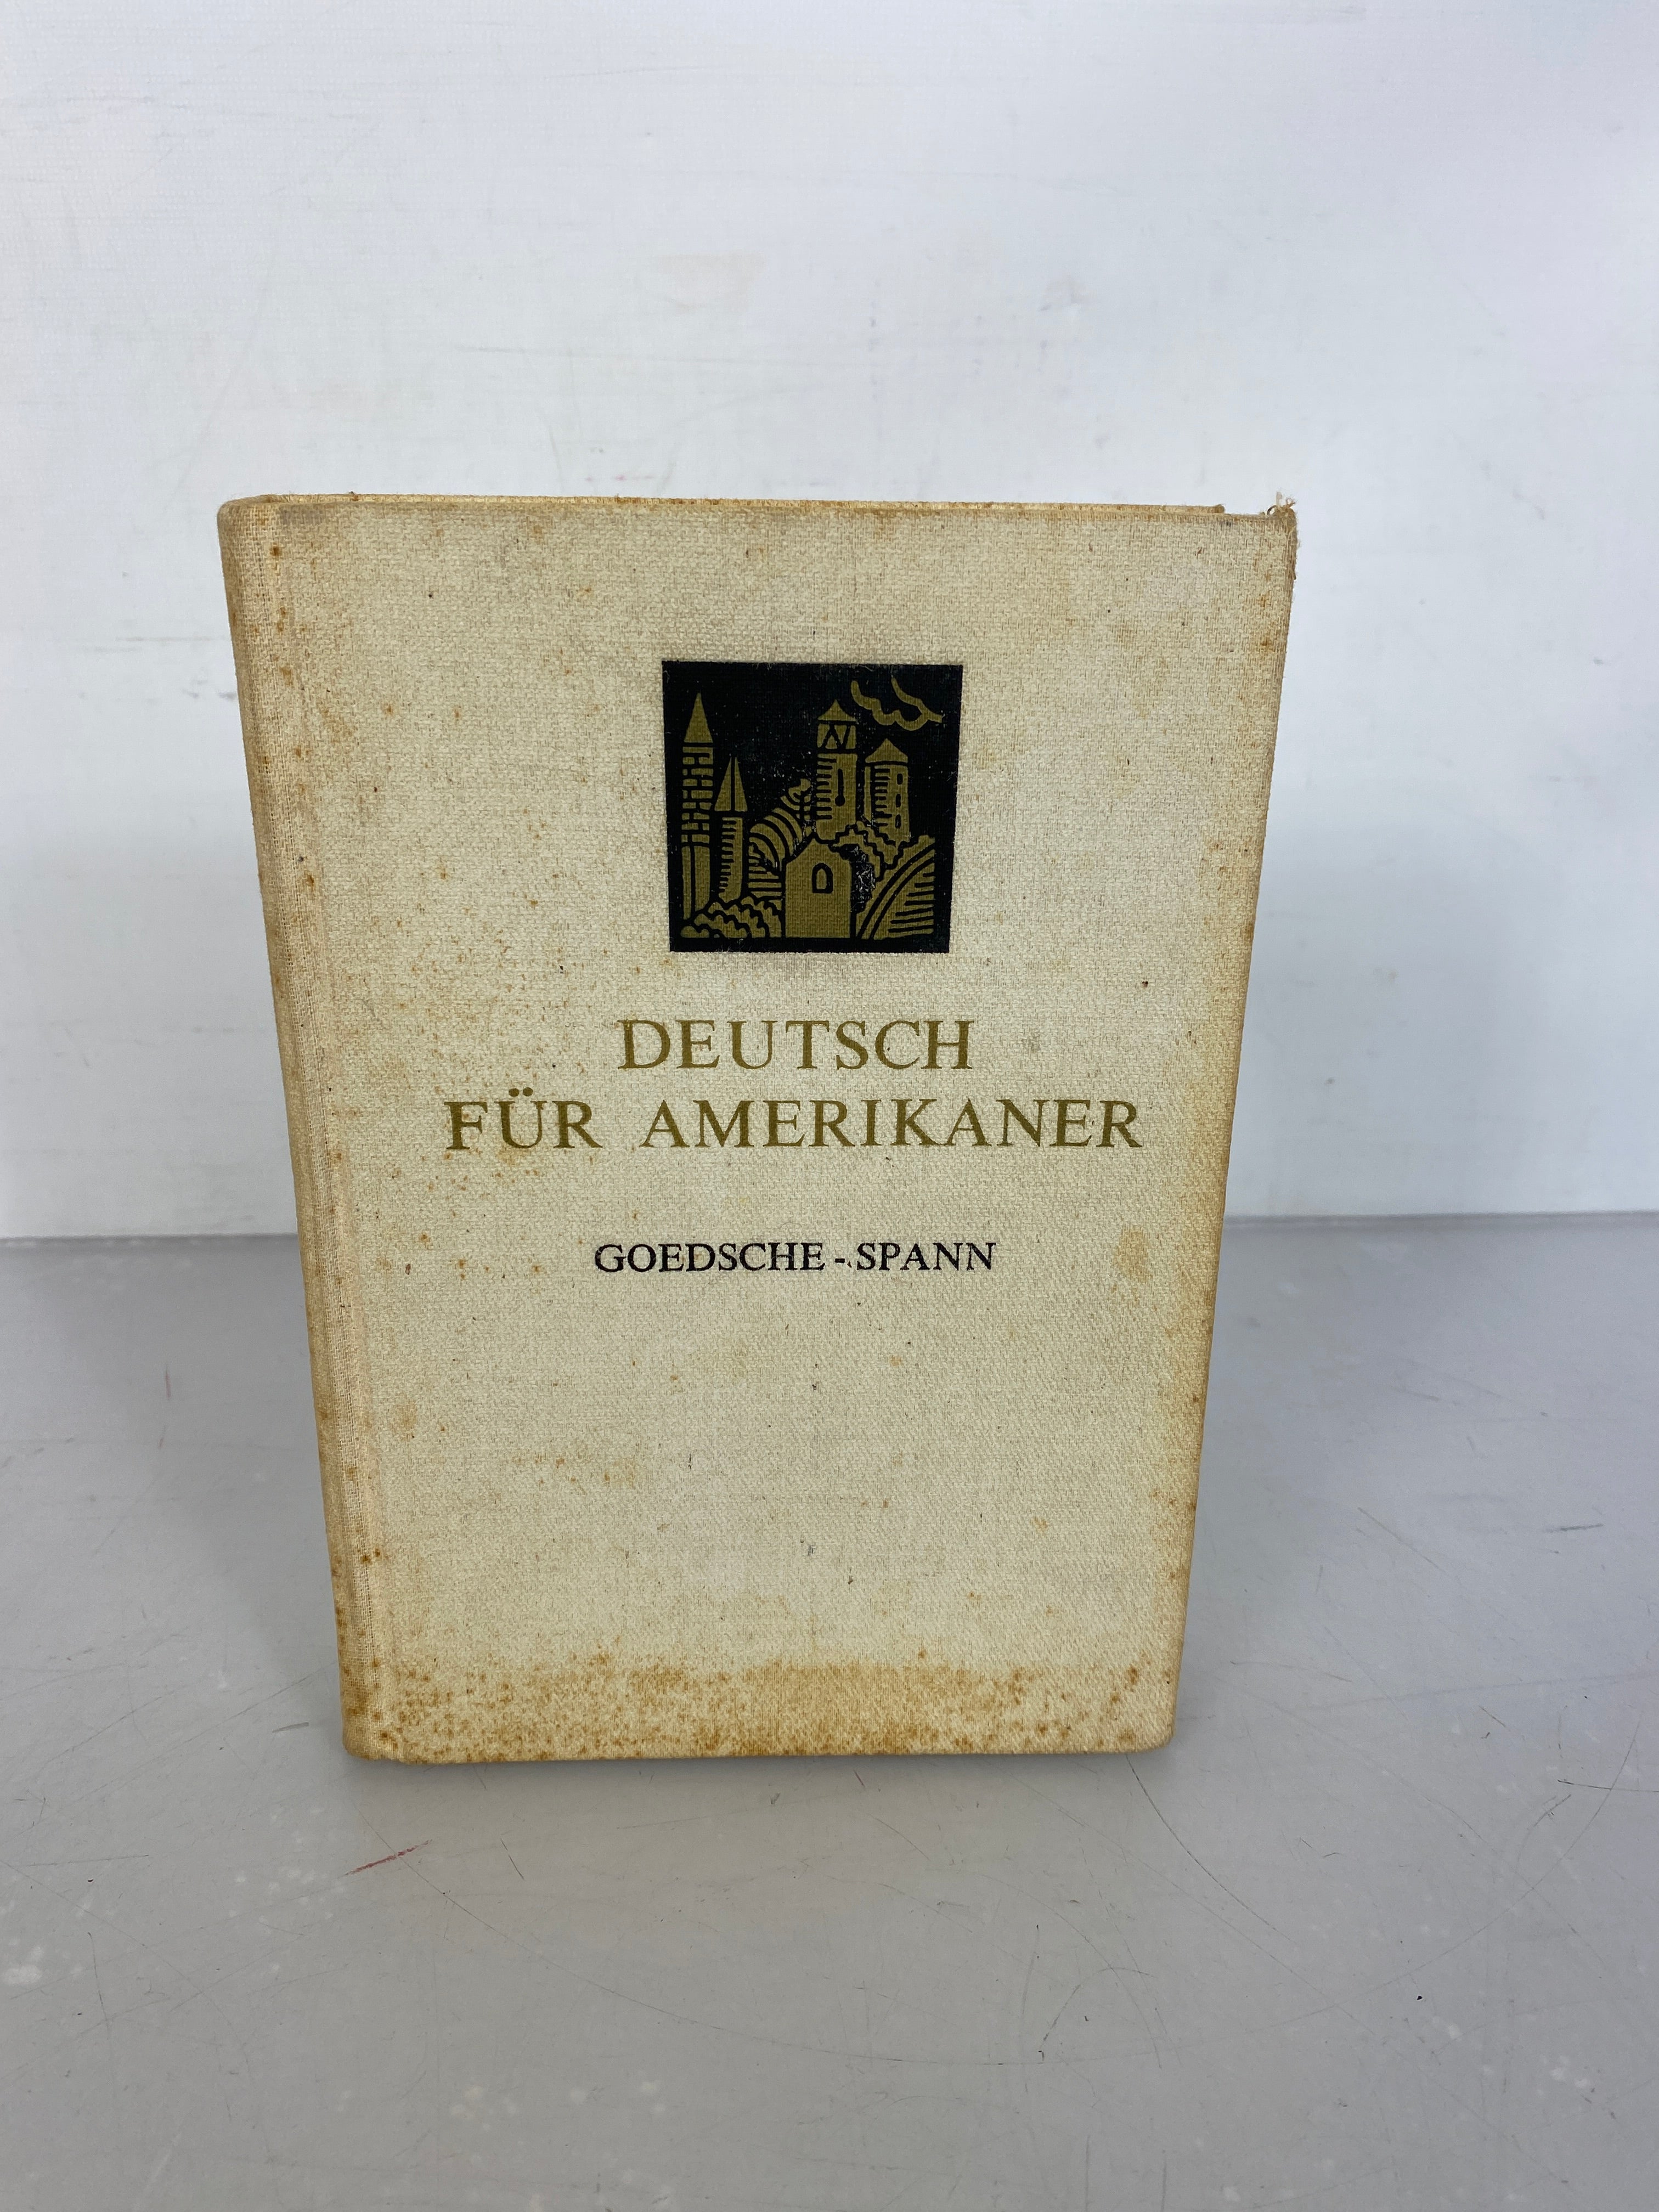 Lot of 2 German Language Practice Books 1960, 1963 HC